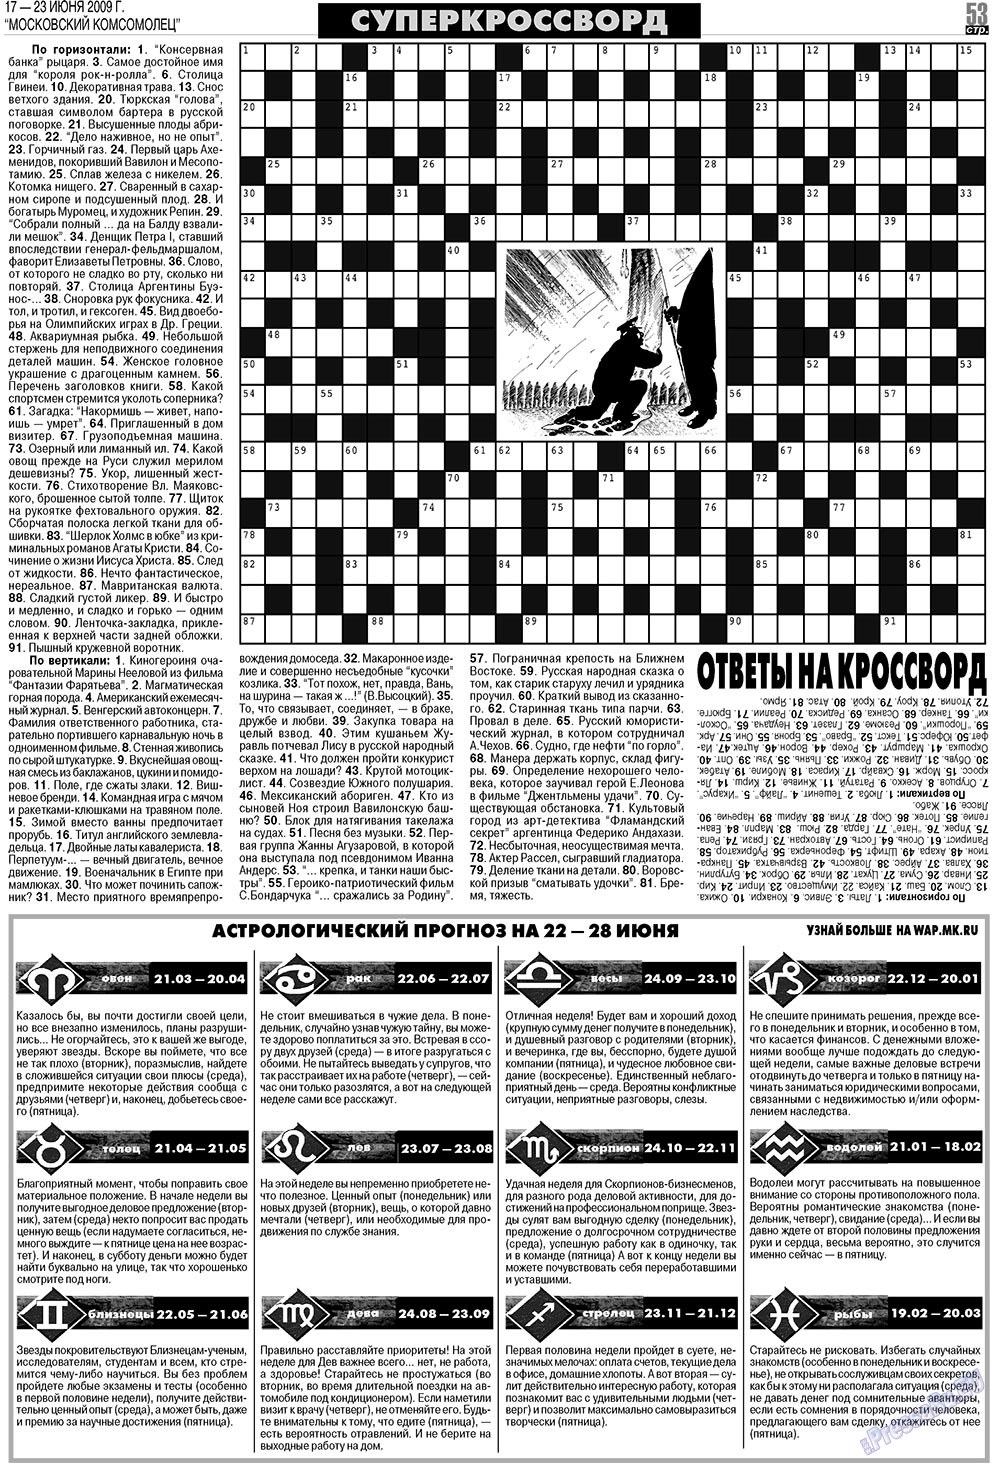 МК Испания (газета). 2009 год, номер 25, стр. 53